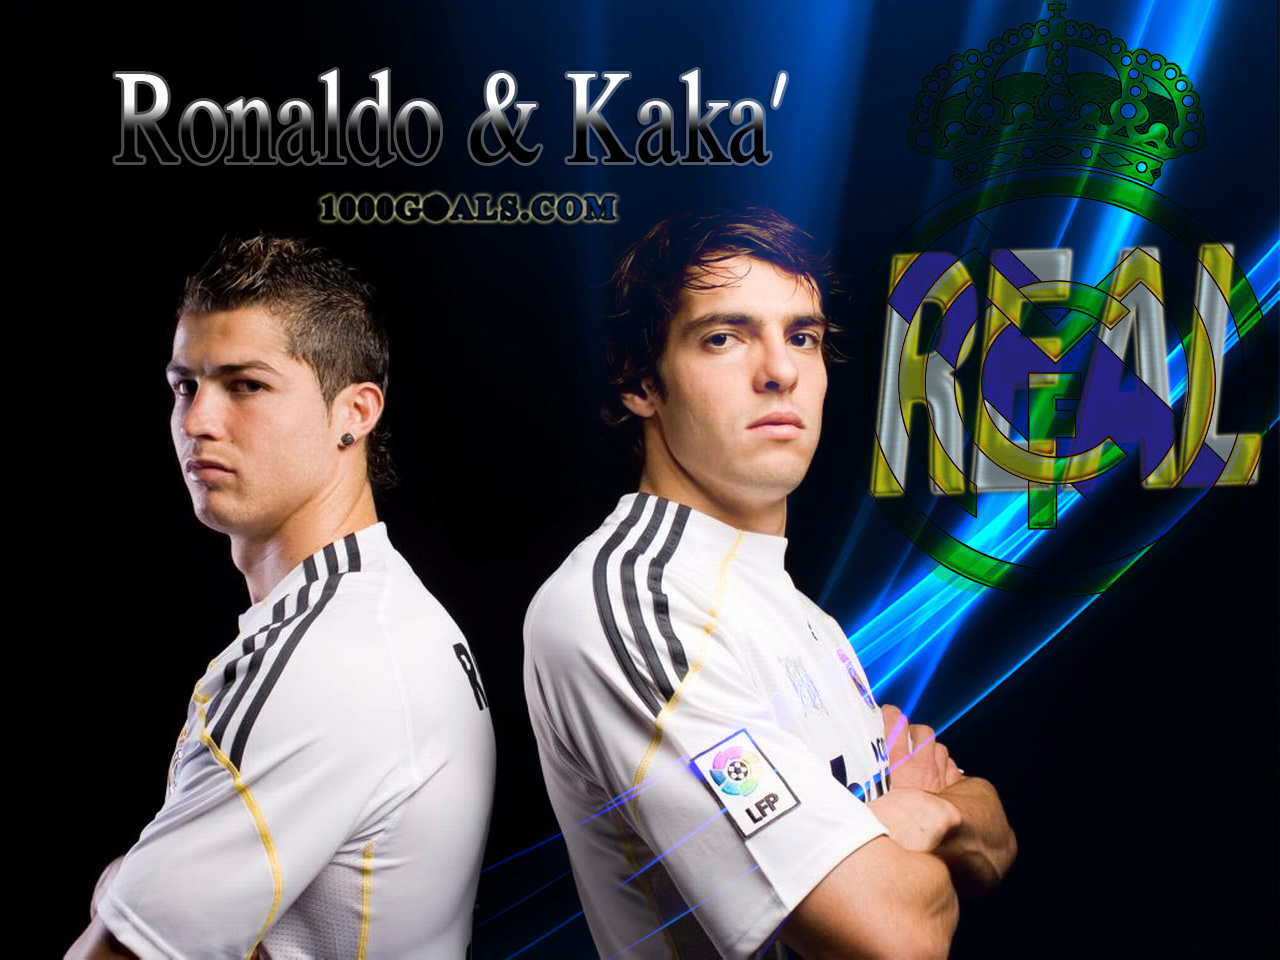 http://4.bp.blogspot.com/-m0Qee2Gi1ds/TsRdNHPwn_I/AAAAAAAAA58/bGxMNBl8lkk/s1600/Cristiano-Ronaldo-Real-Madrid-Wallpaper+Fondo+de+escritorio.jpg